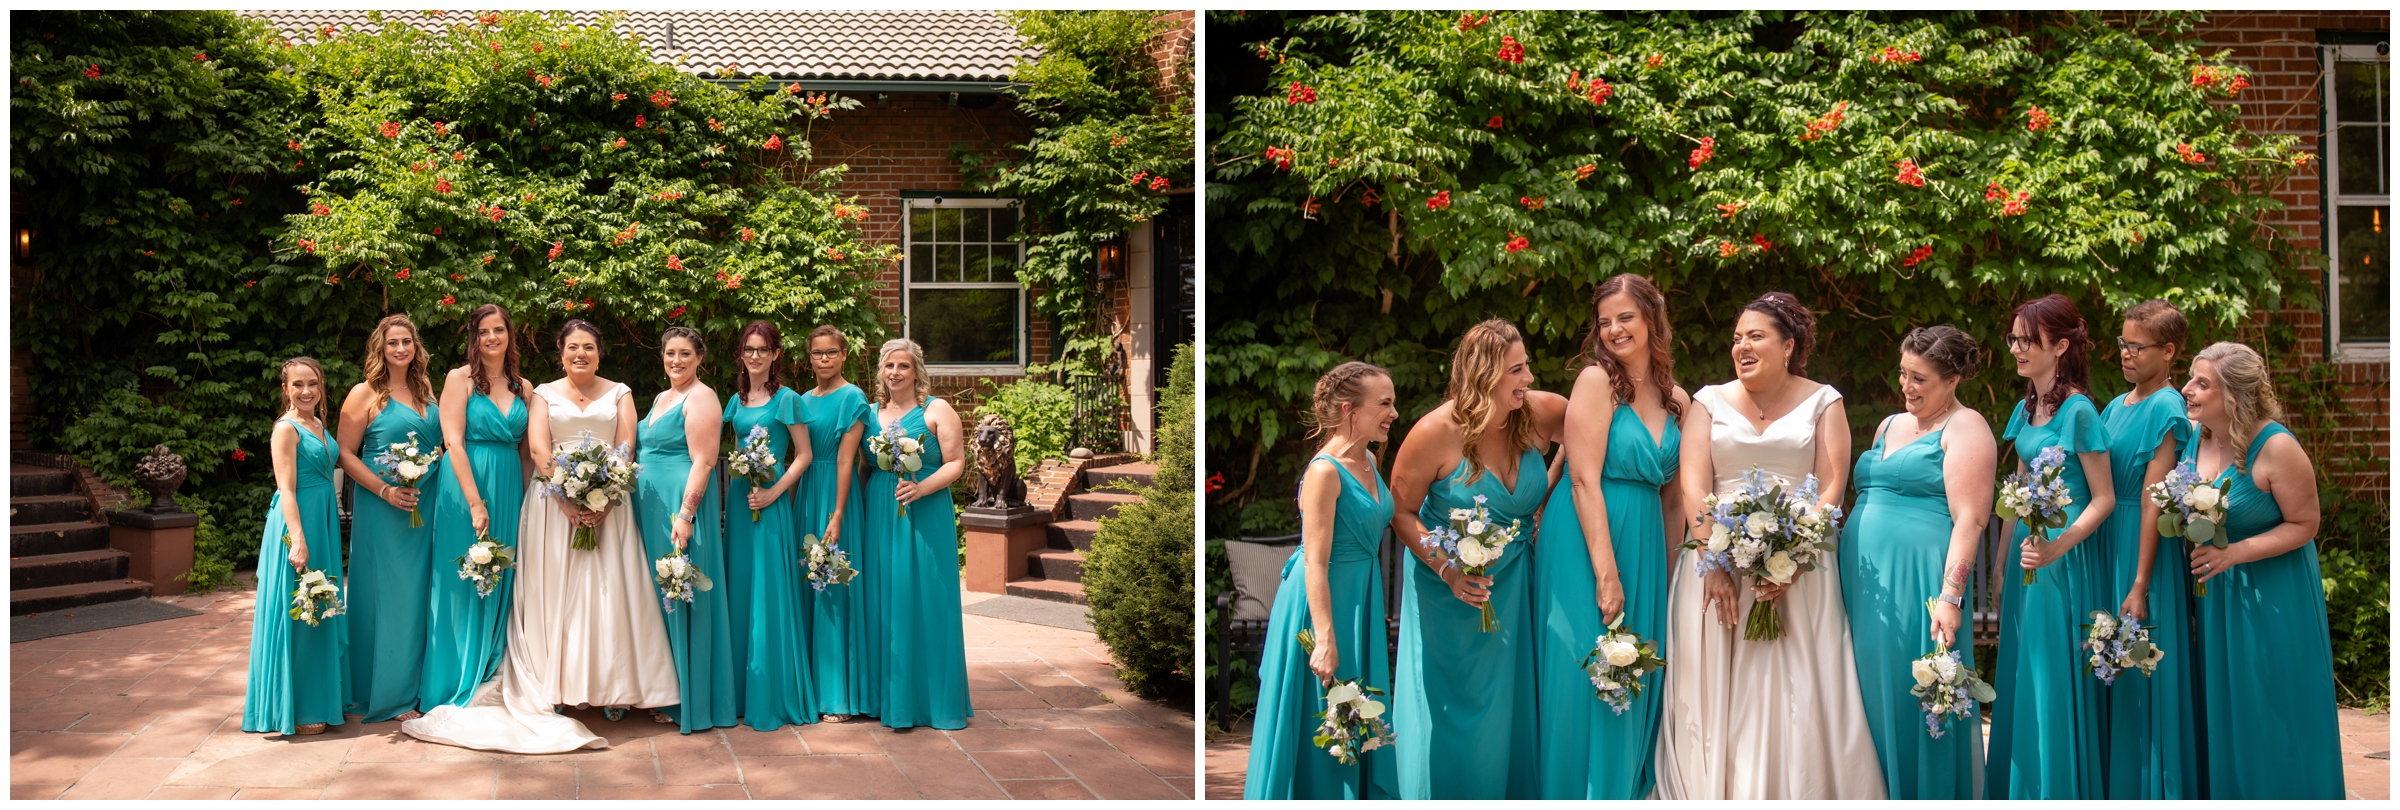 bridesmaids in aqua blue dresses posing in front of dove house during Colorado summer wedding photos 